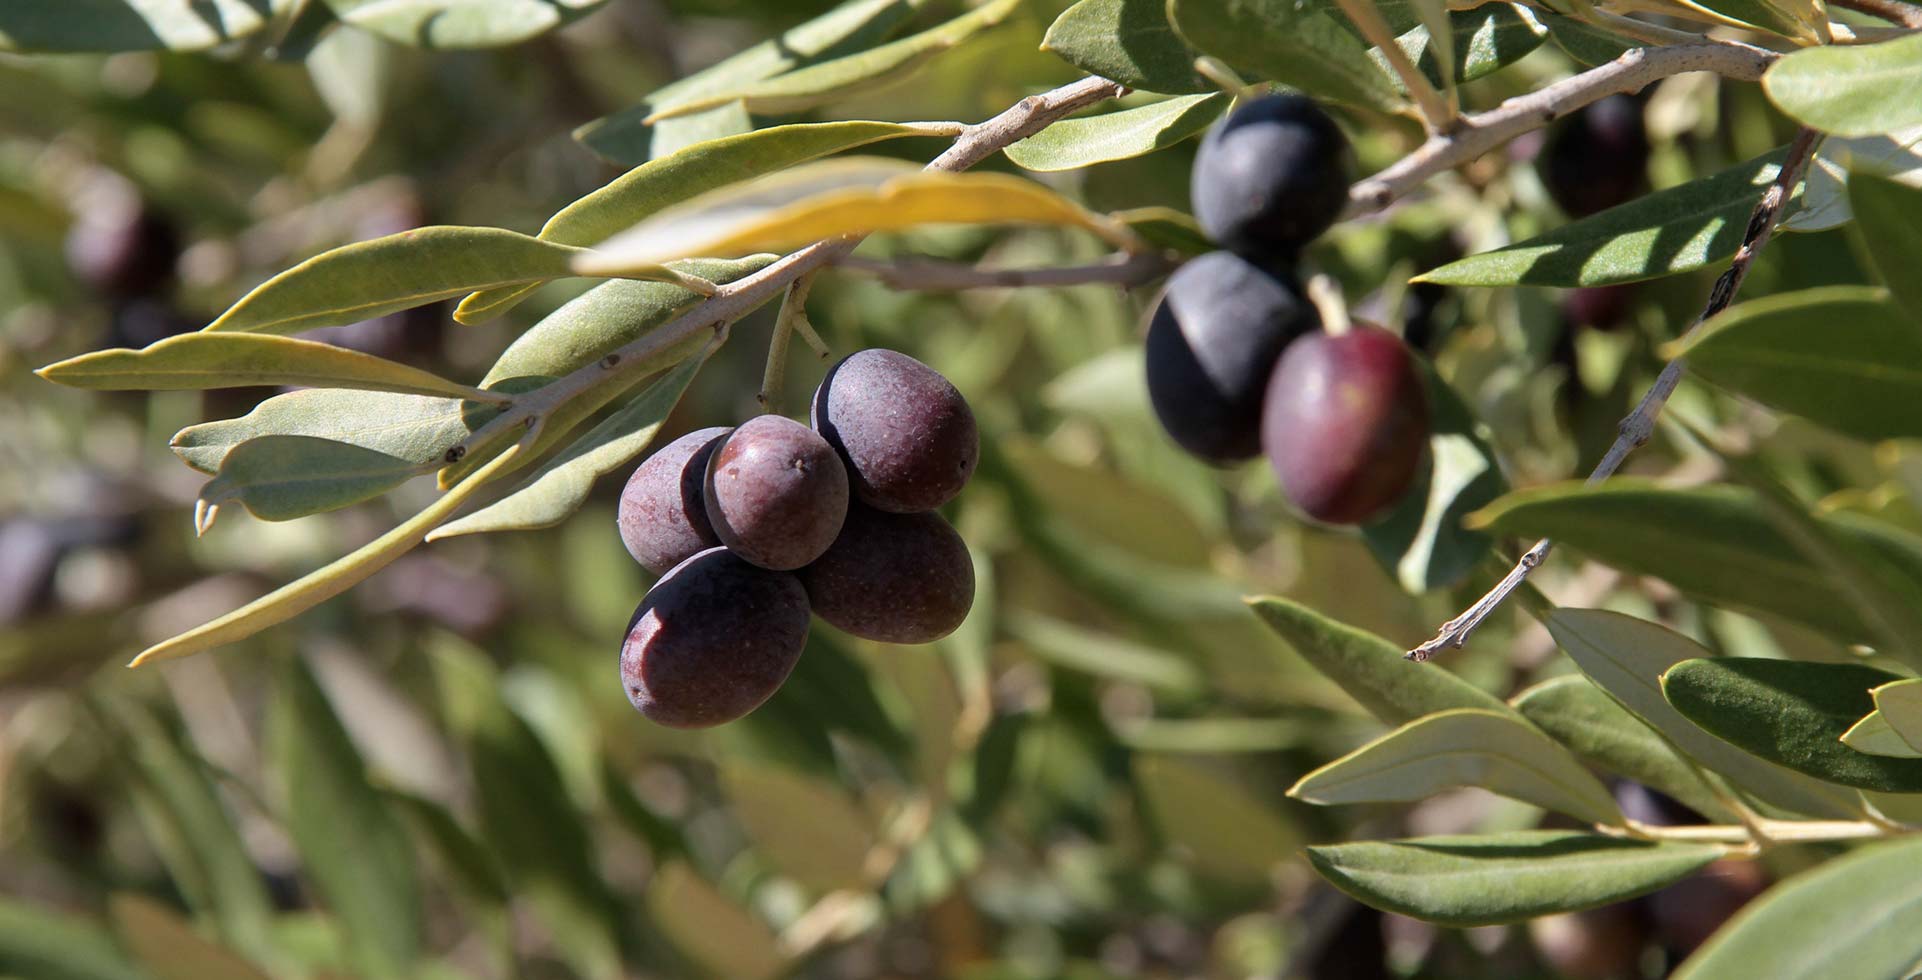 olive nere mature